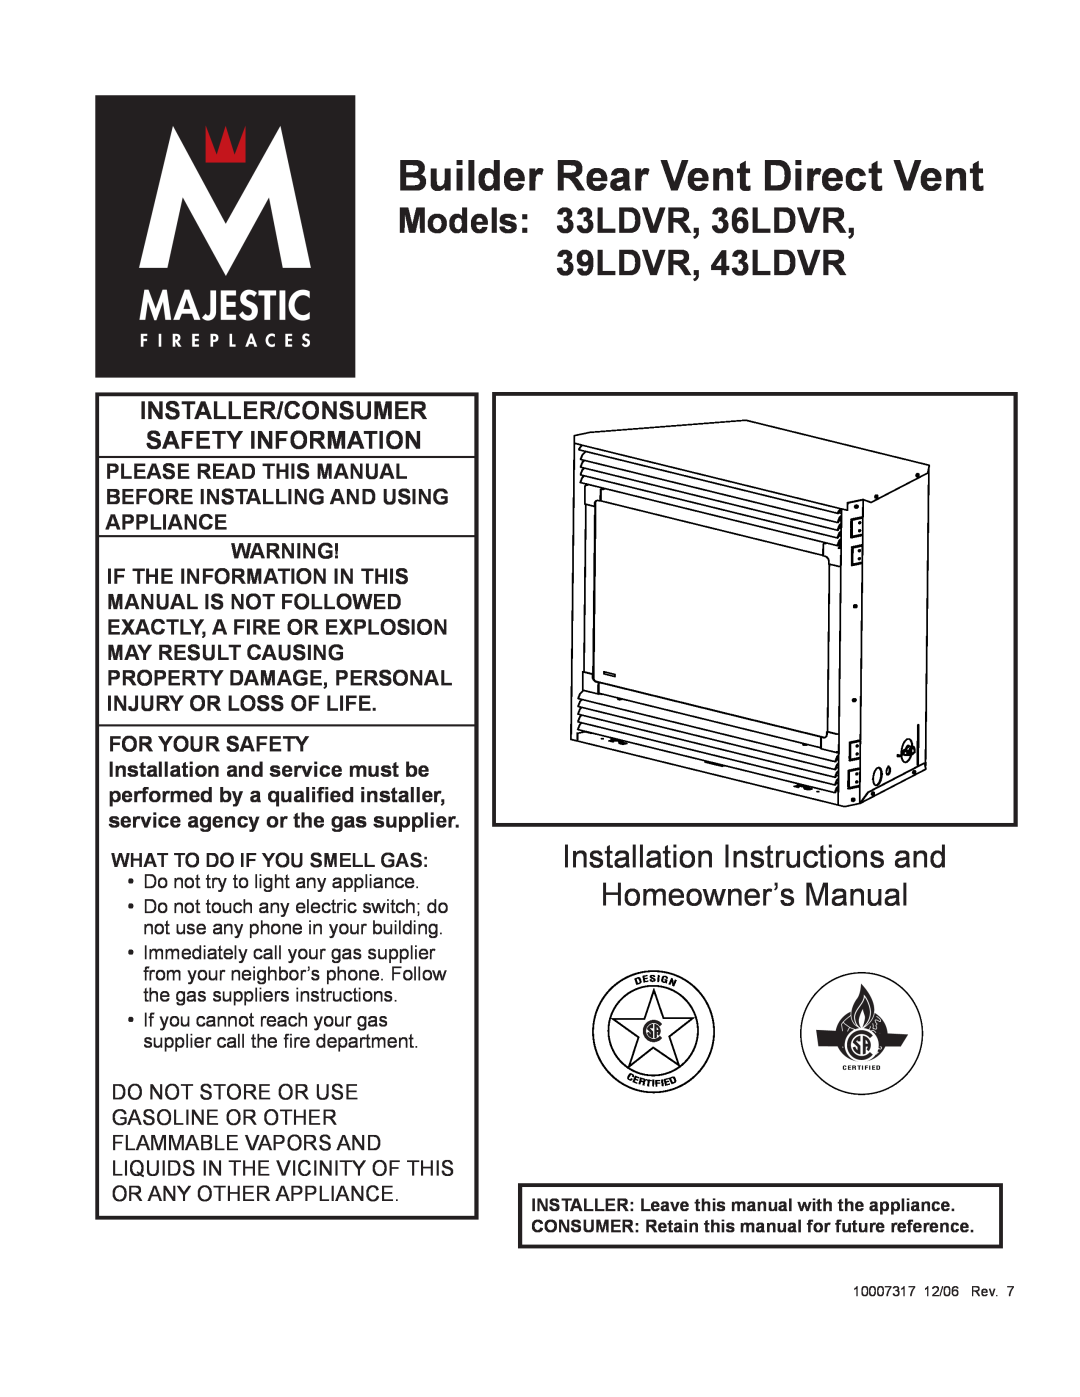 Vermont Casting installation instructions Builder Rear Vent Direct Vent, Models 33LDVR, 36LDVR, 39LDVR, 43LDVR 